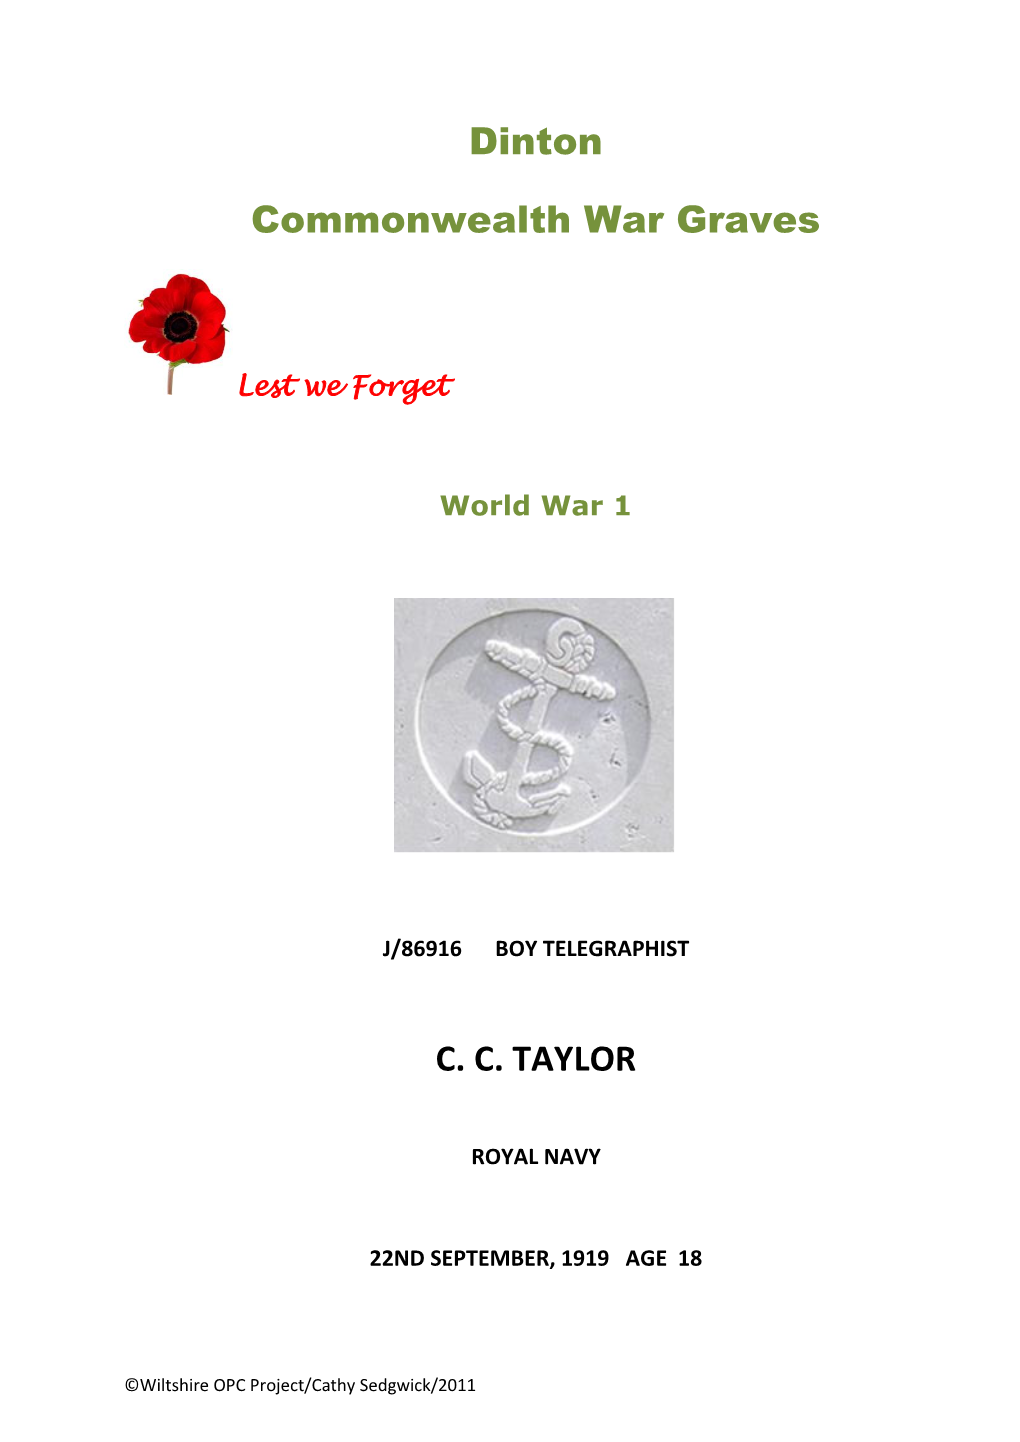 Dinton Commonwealth War Graves C. C. TAYLOR